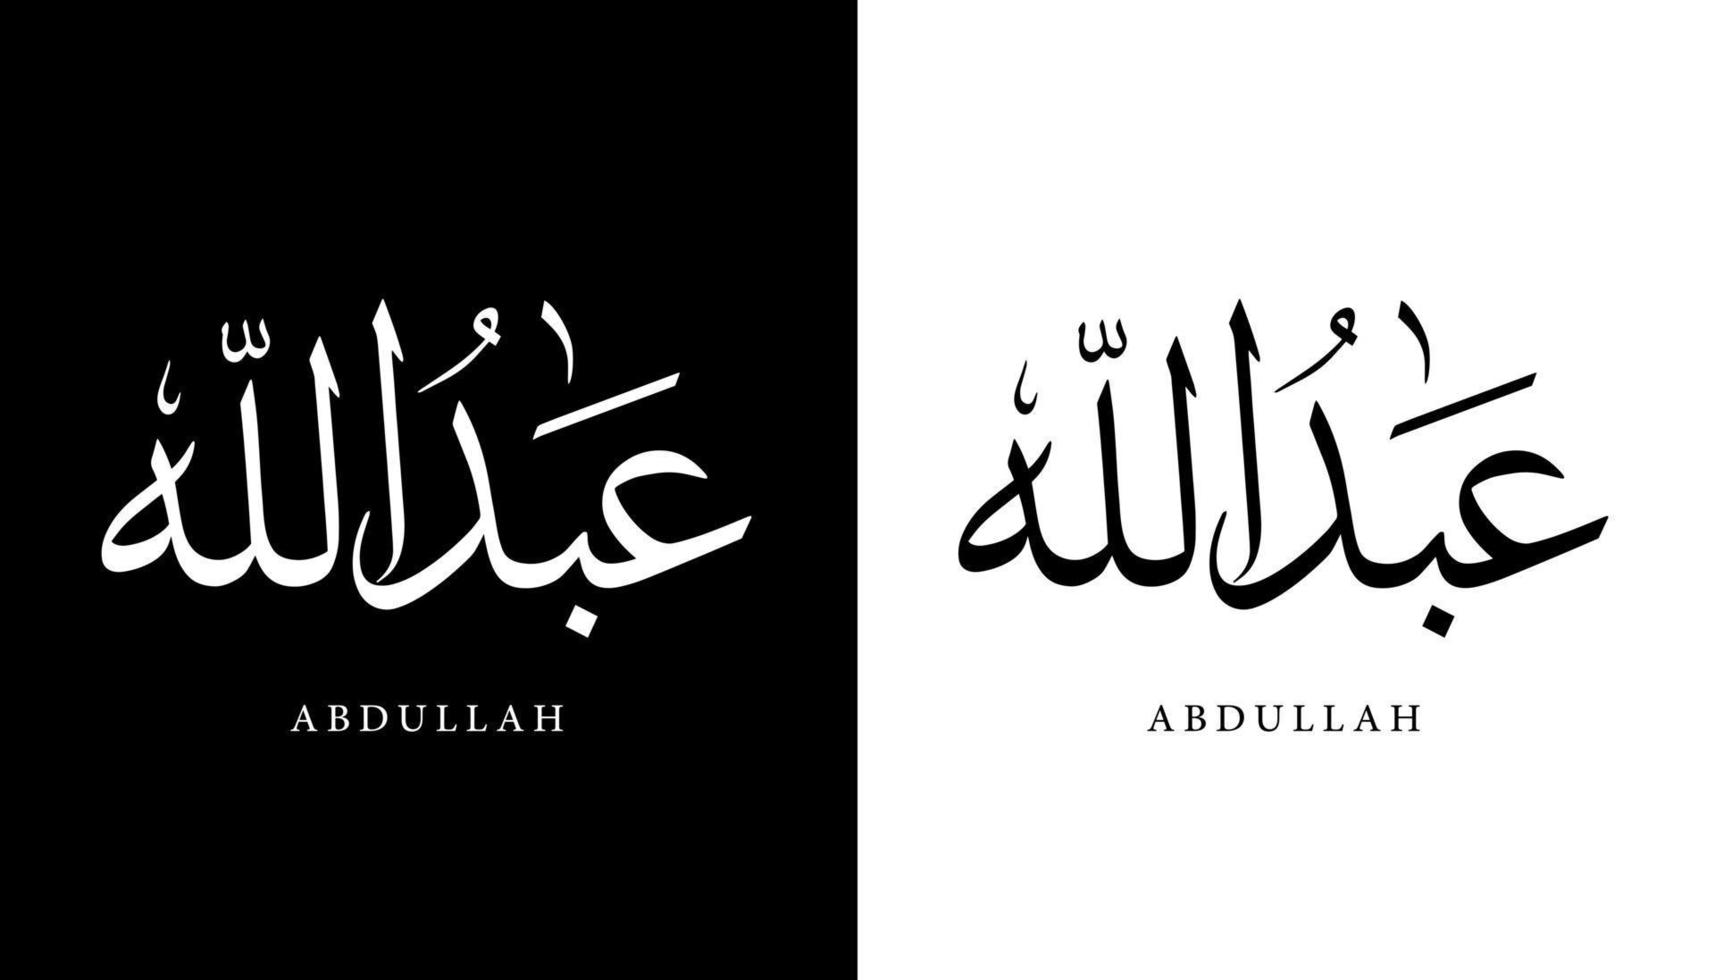 nombre de caligrafía árabe traducido 'abdullah' letras árabes alfabeto fuente letras islámicas logo vector ilustración